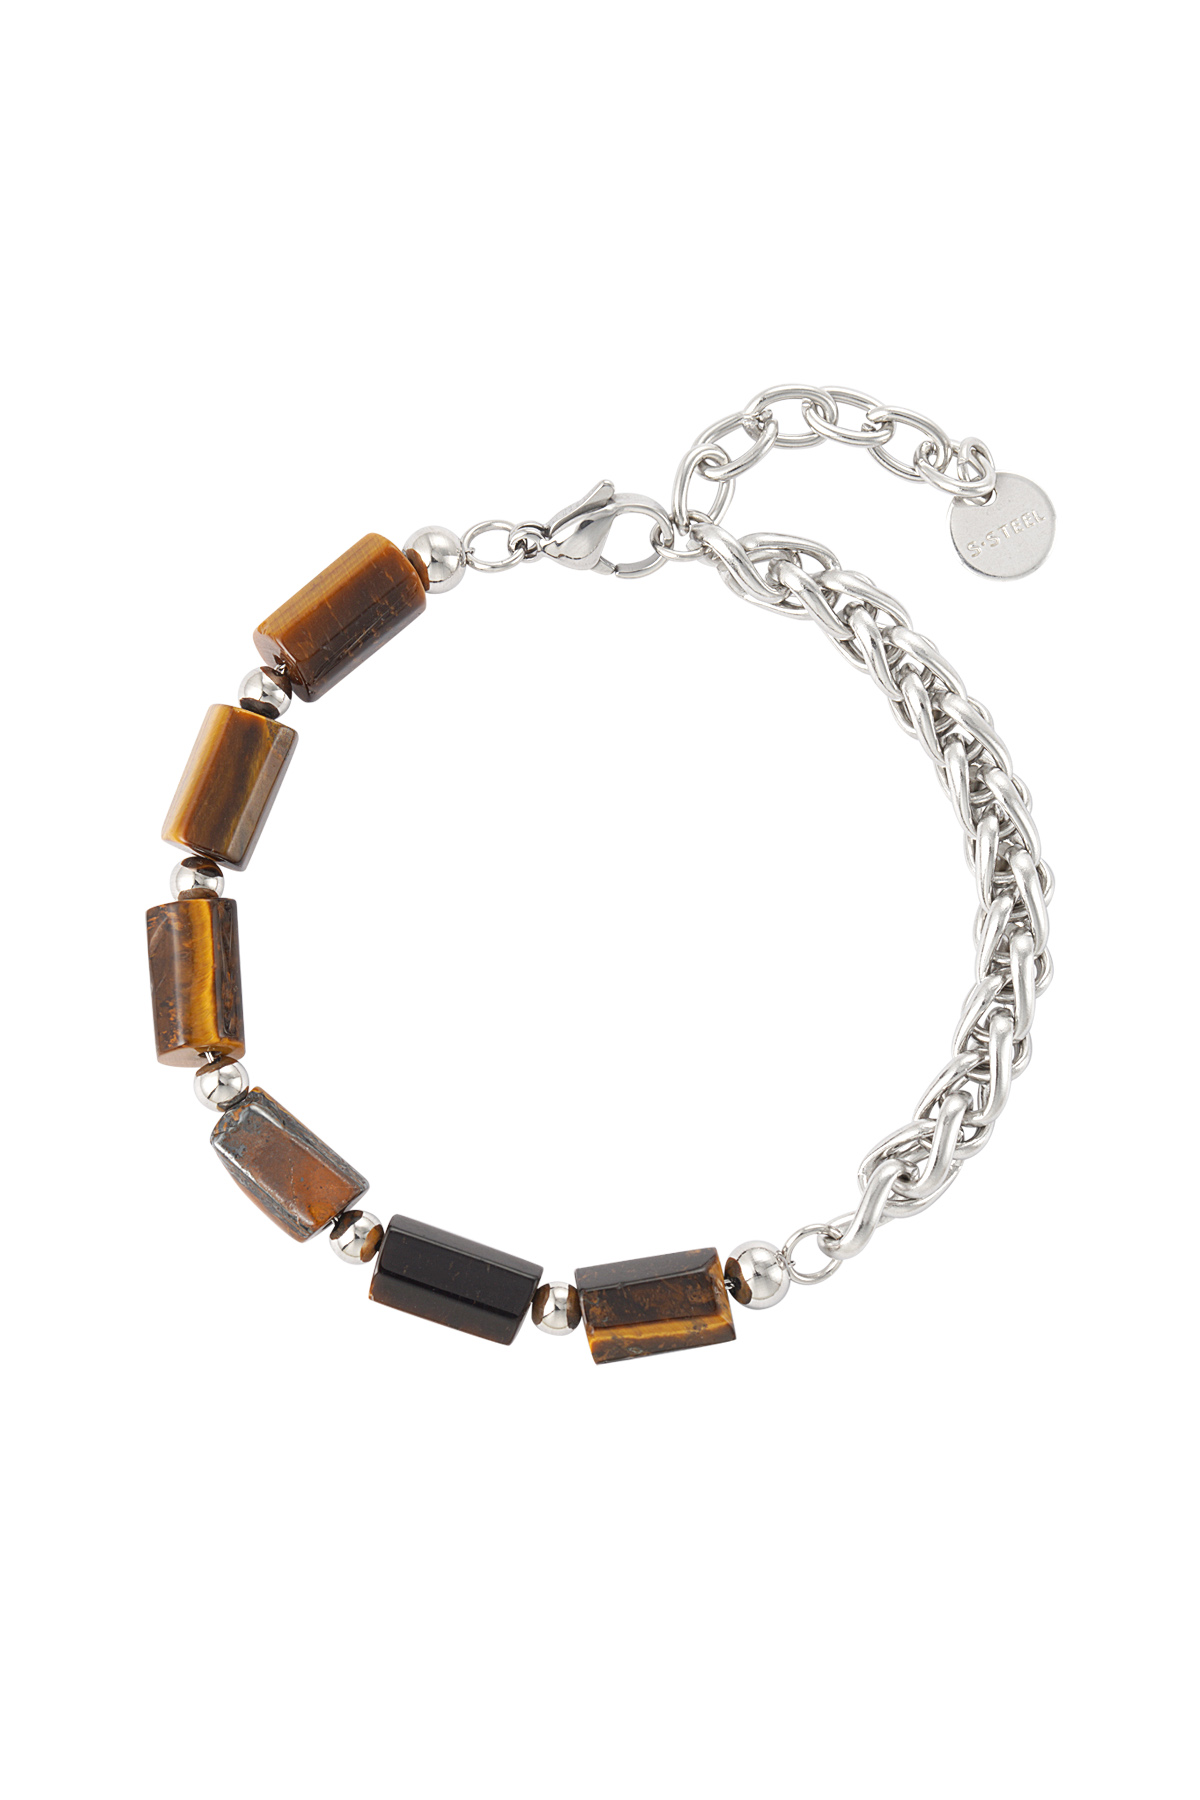 Half chained half charms bracelet - black/brown